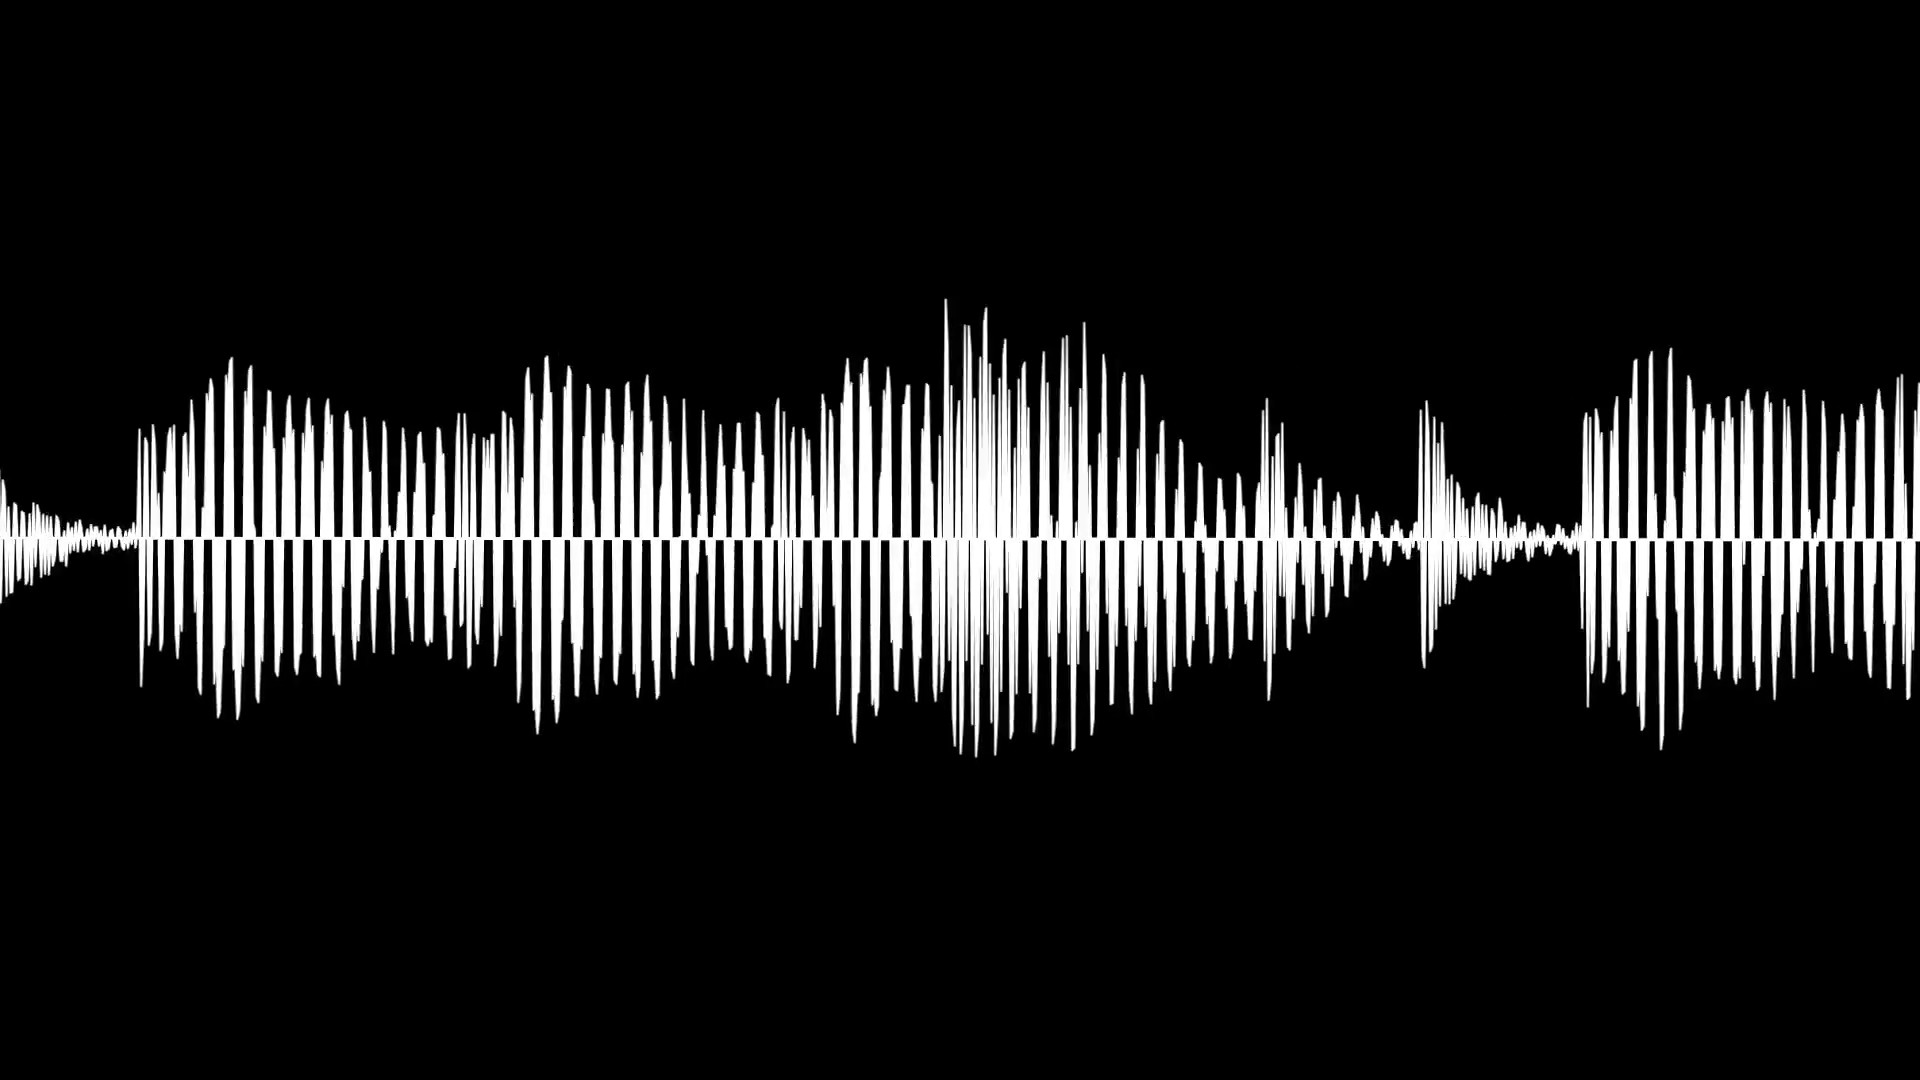 Wait sound. Звуковая волна. Визуализация звука. Звуковая дорожка. Волны звука.